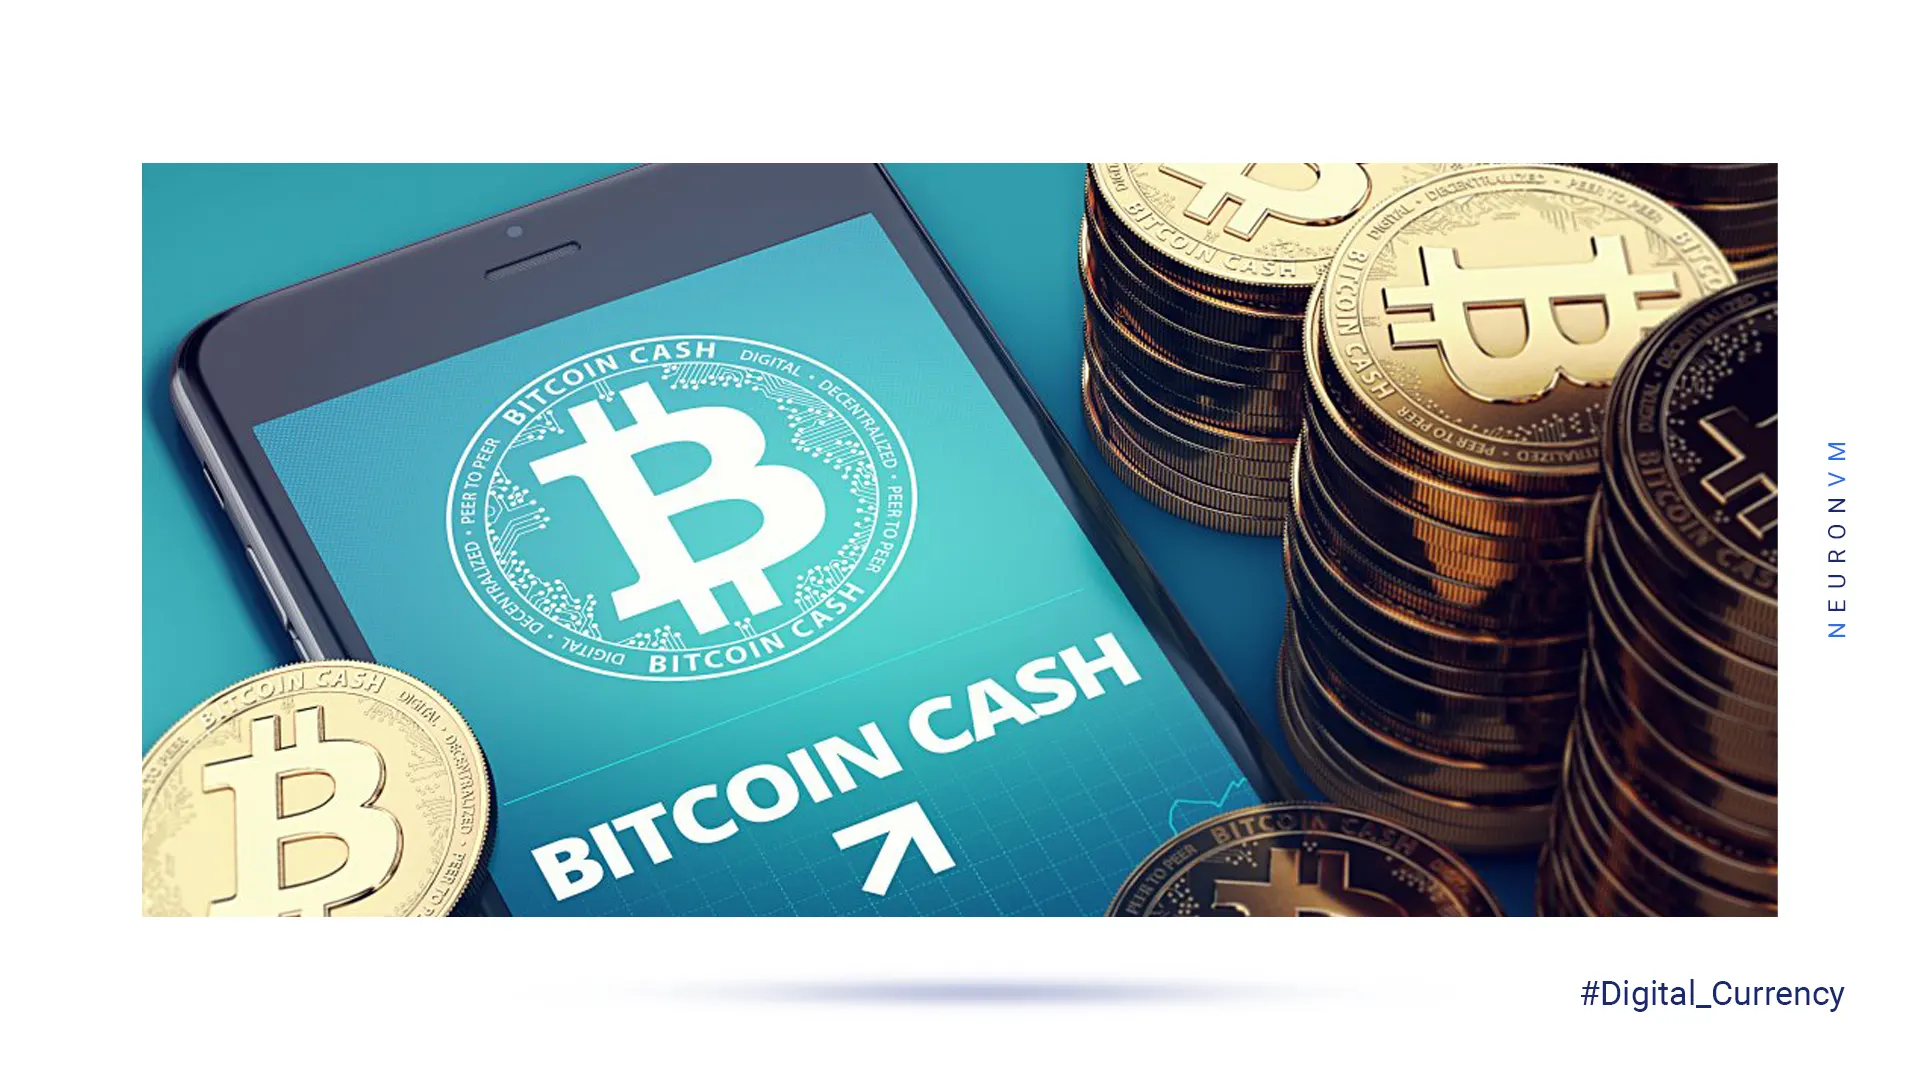 Digital Currency Bitcoin Cash